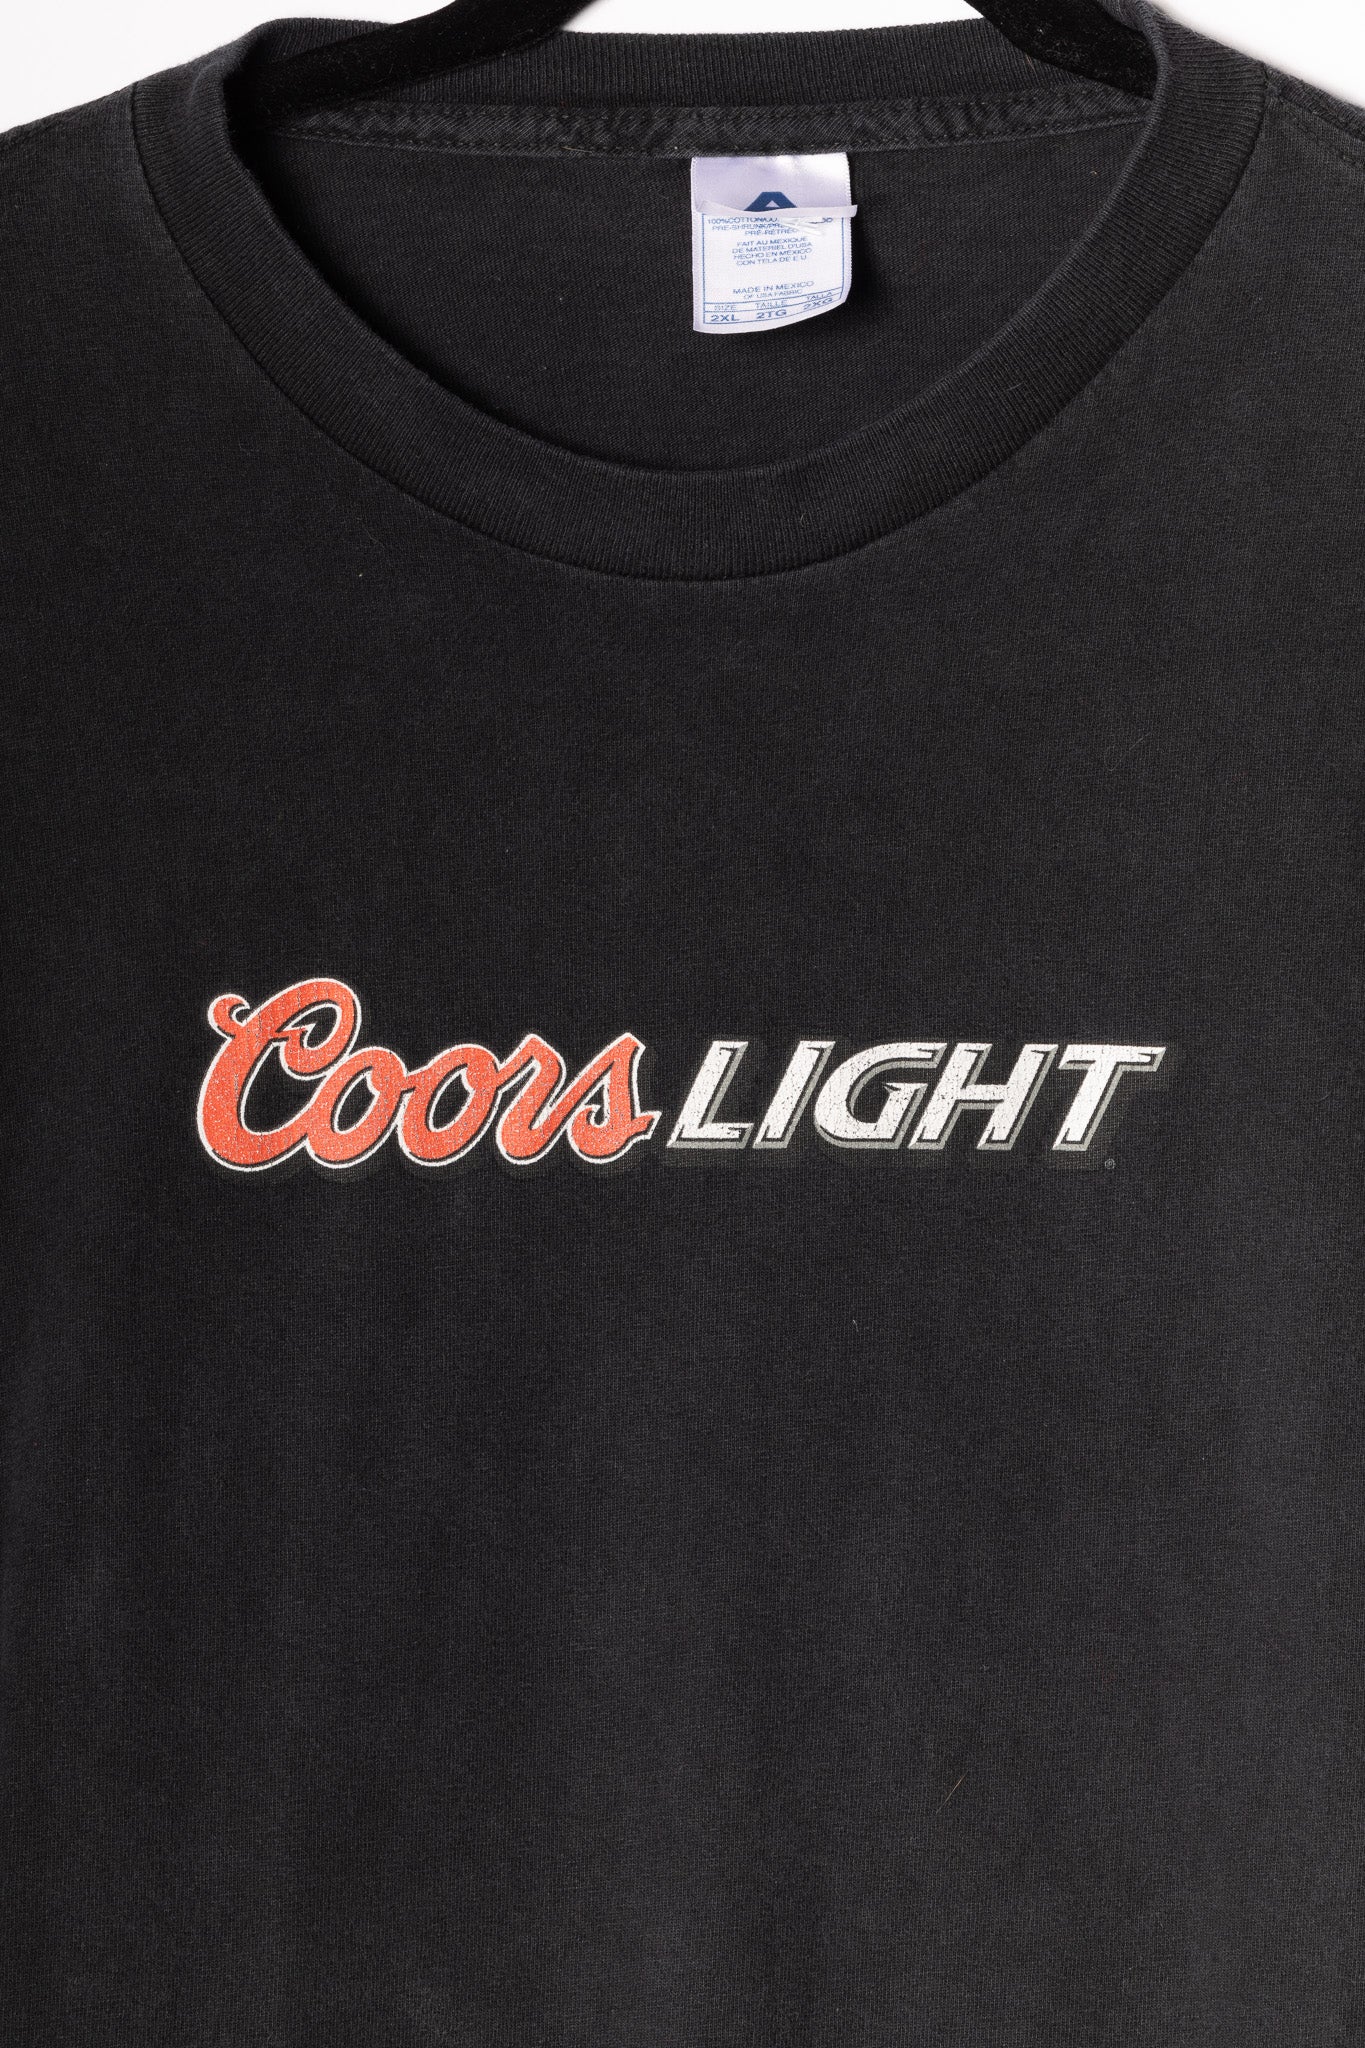 Vintage Coors Light Tee Shirt